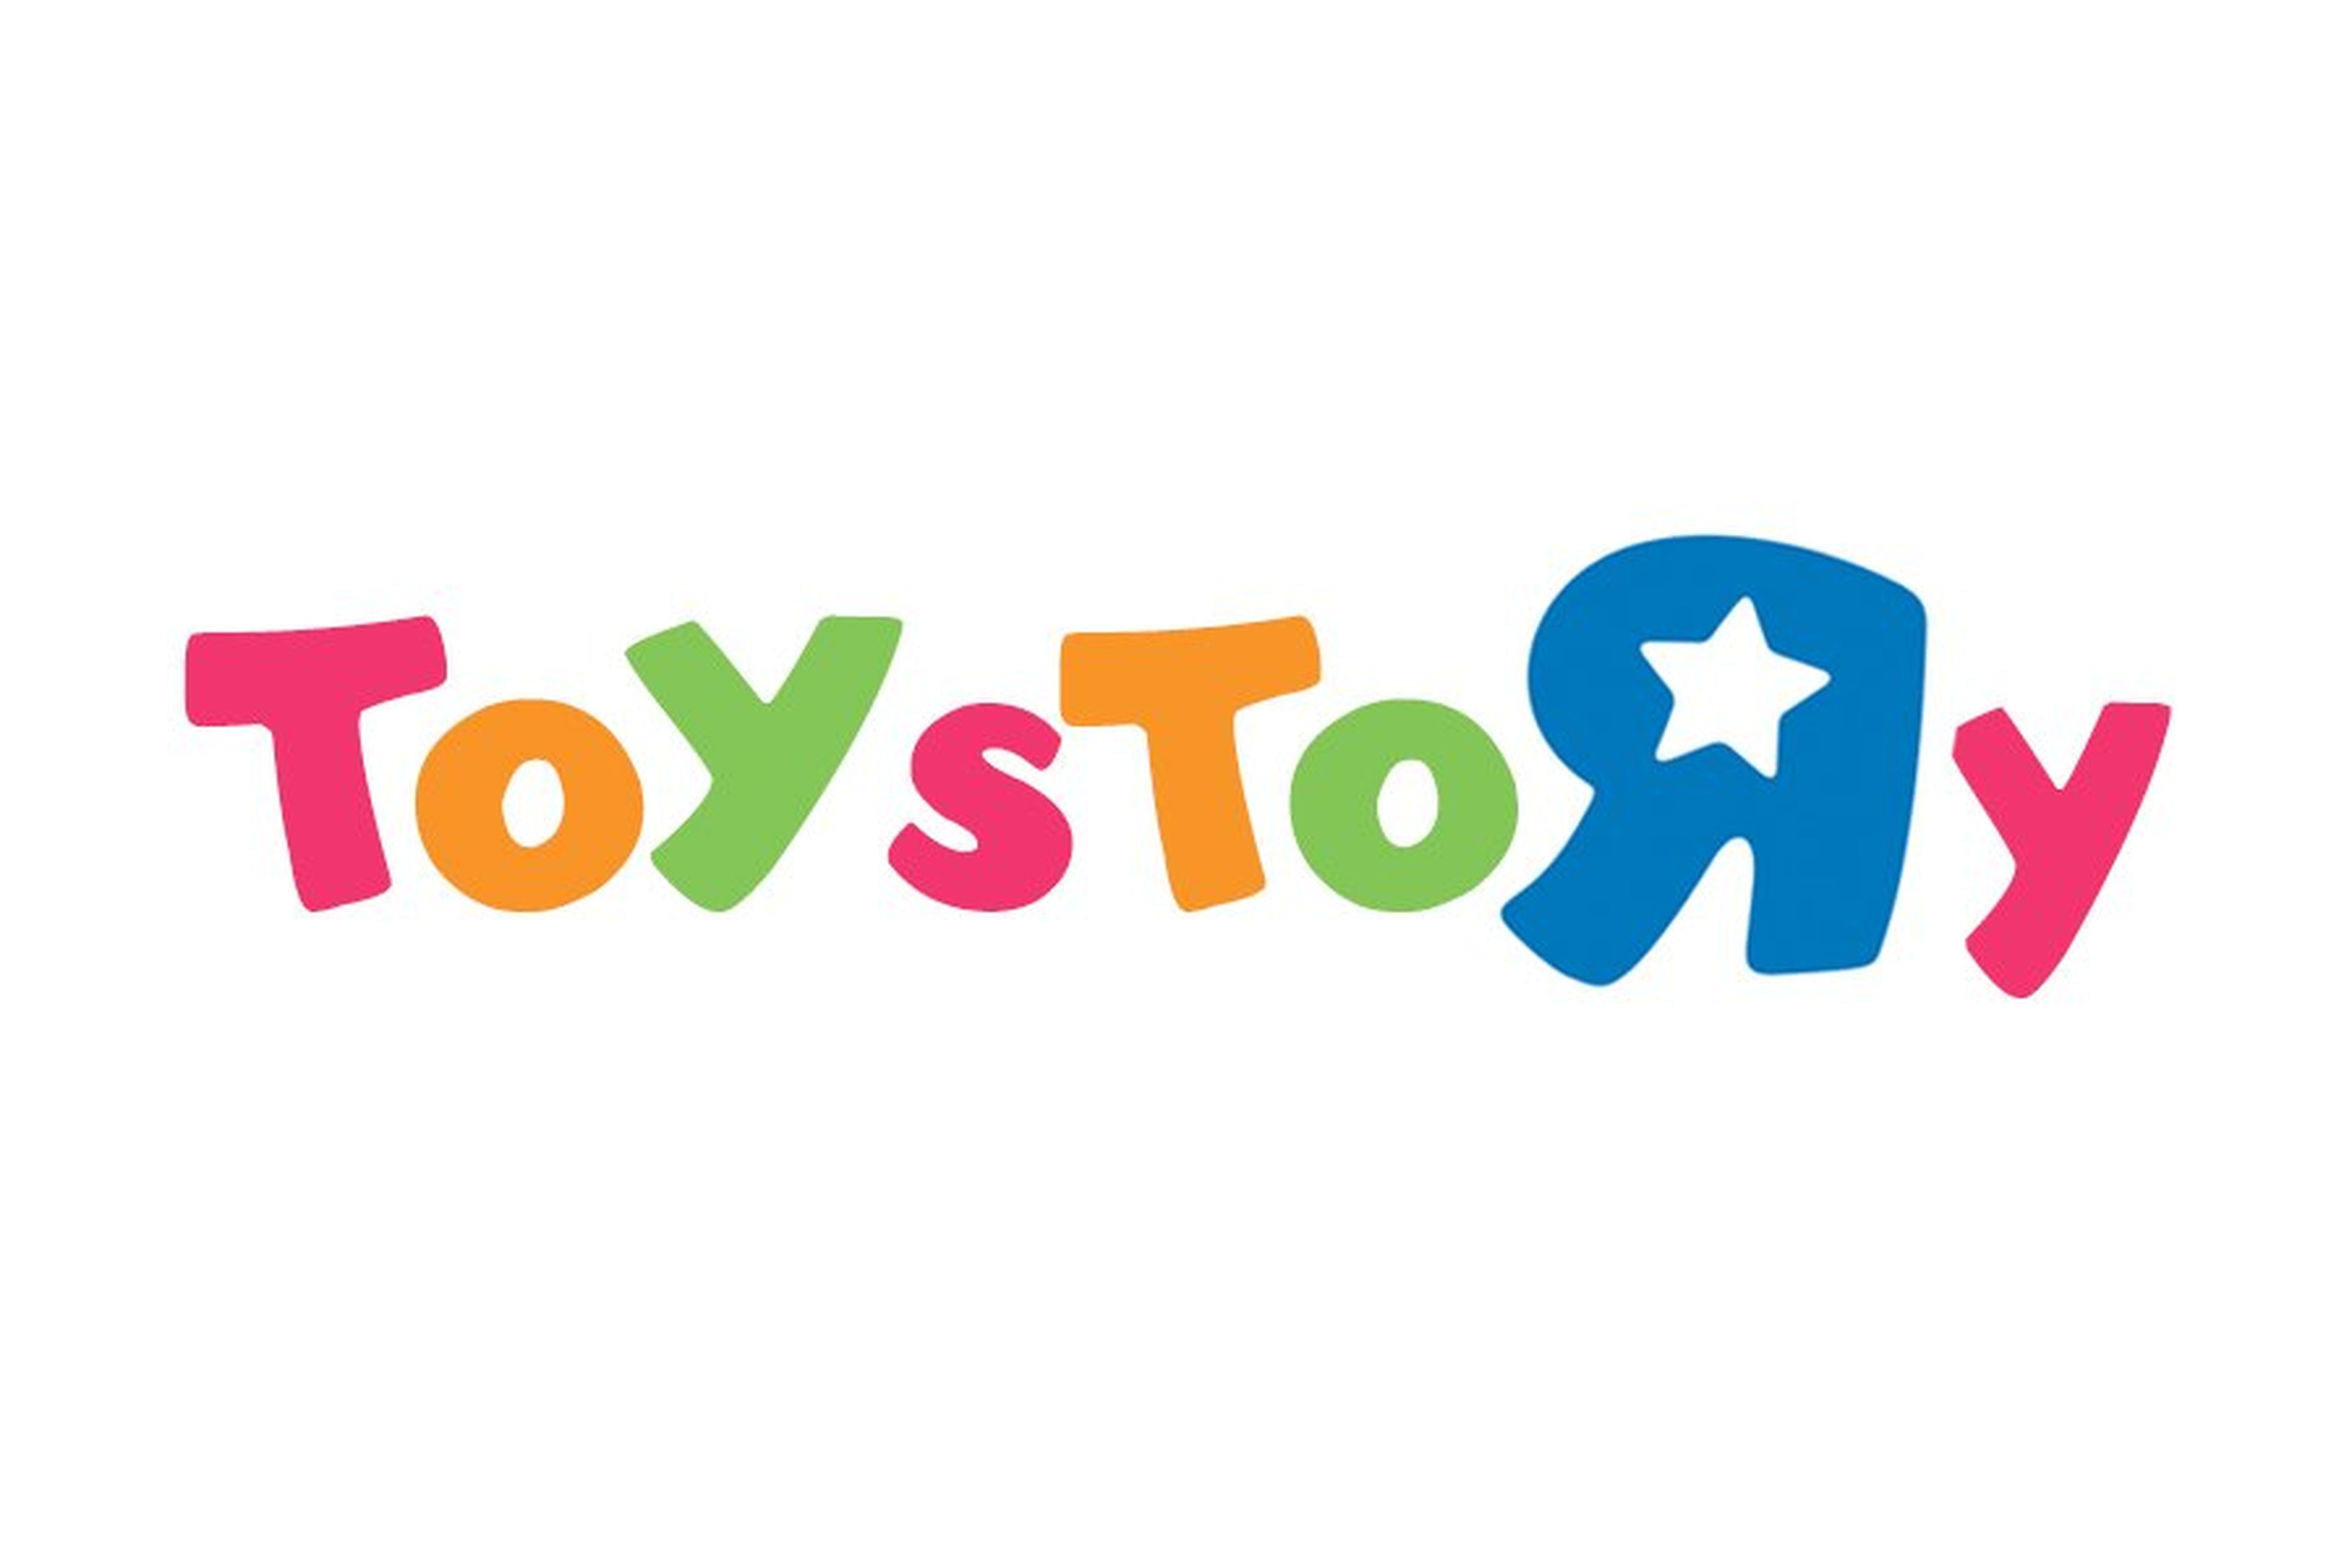 Si Toy Story fuera un logo